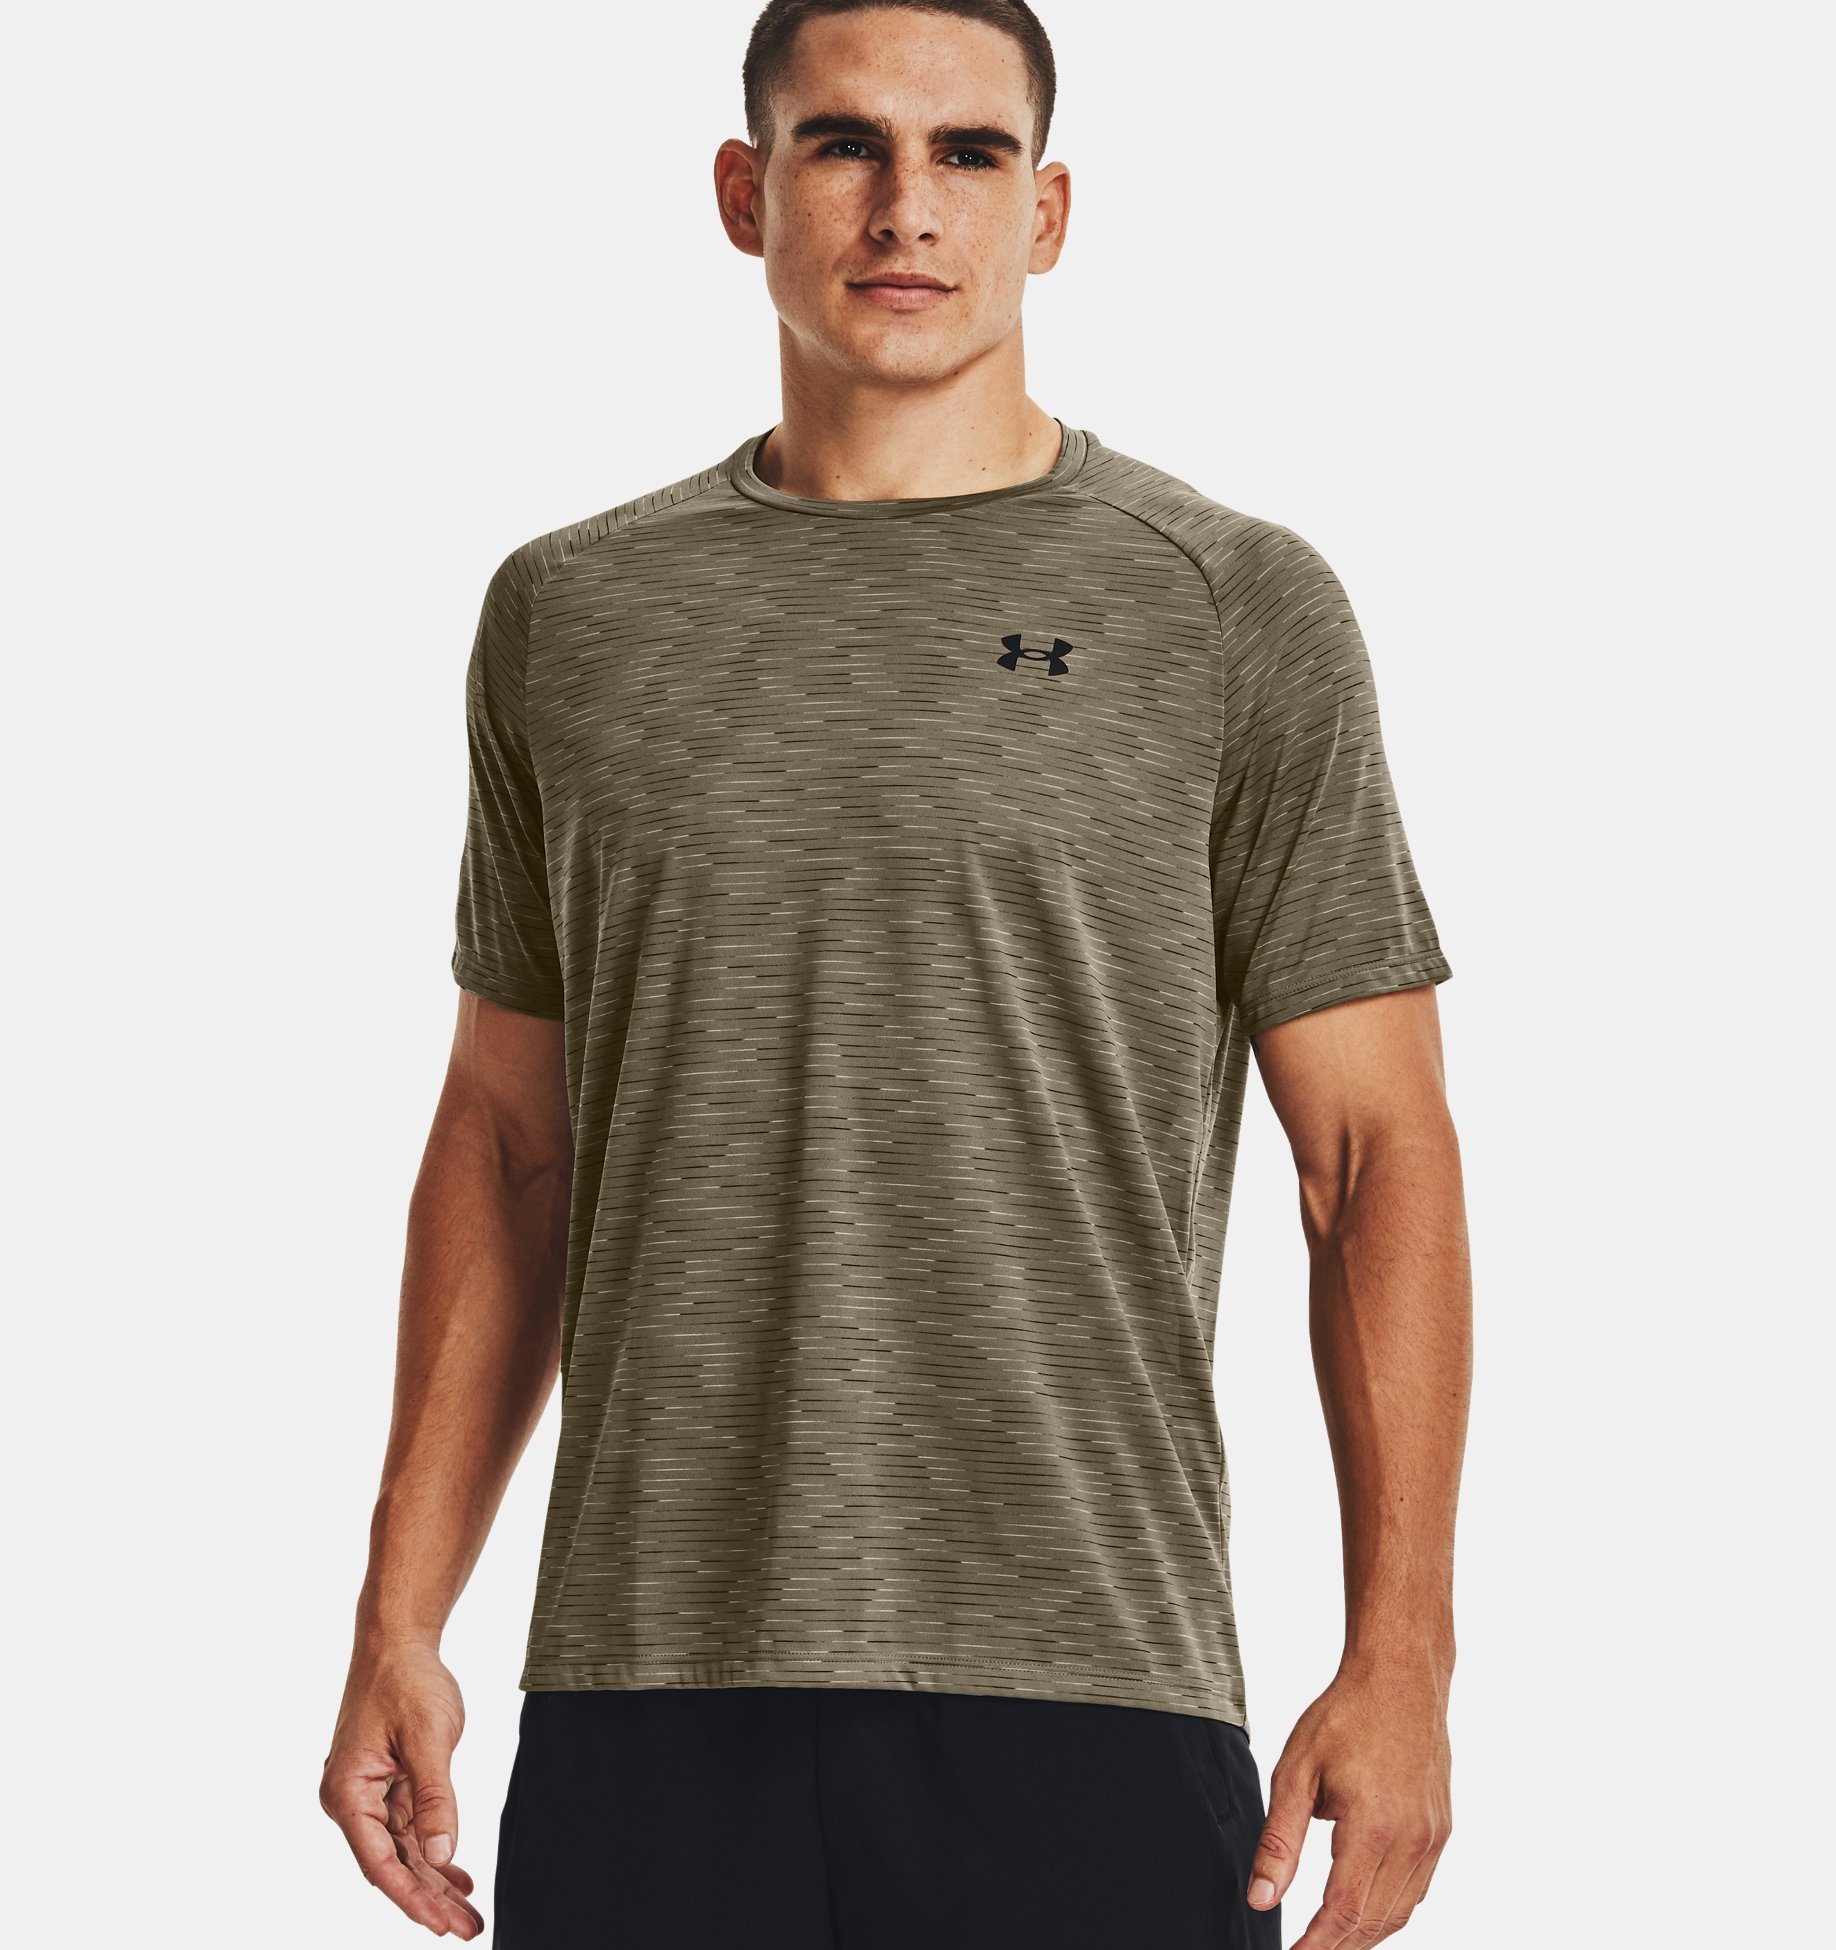 Under Armour Tech Mens Training Top Grey Short Sleeve T-Shirt Gym Running M L UA 